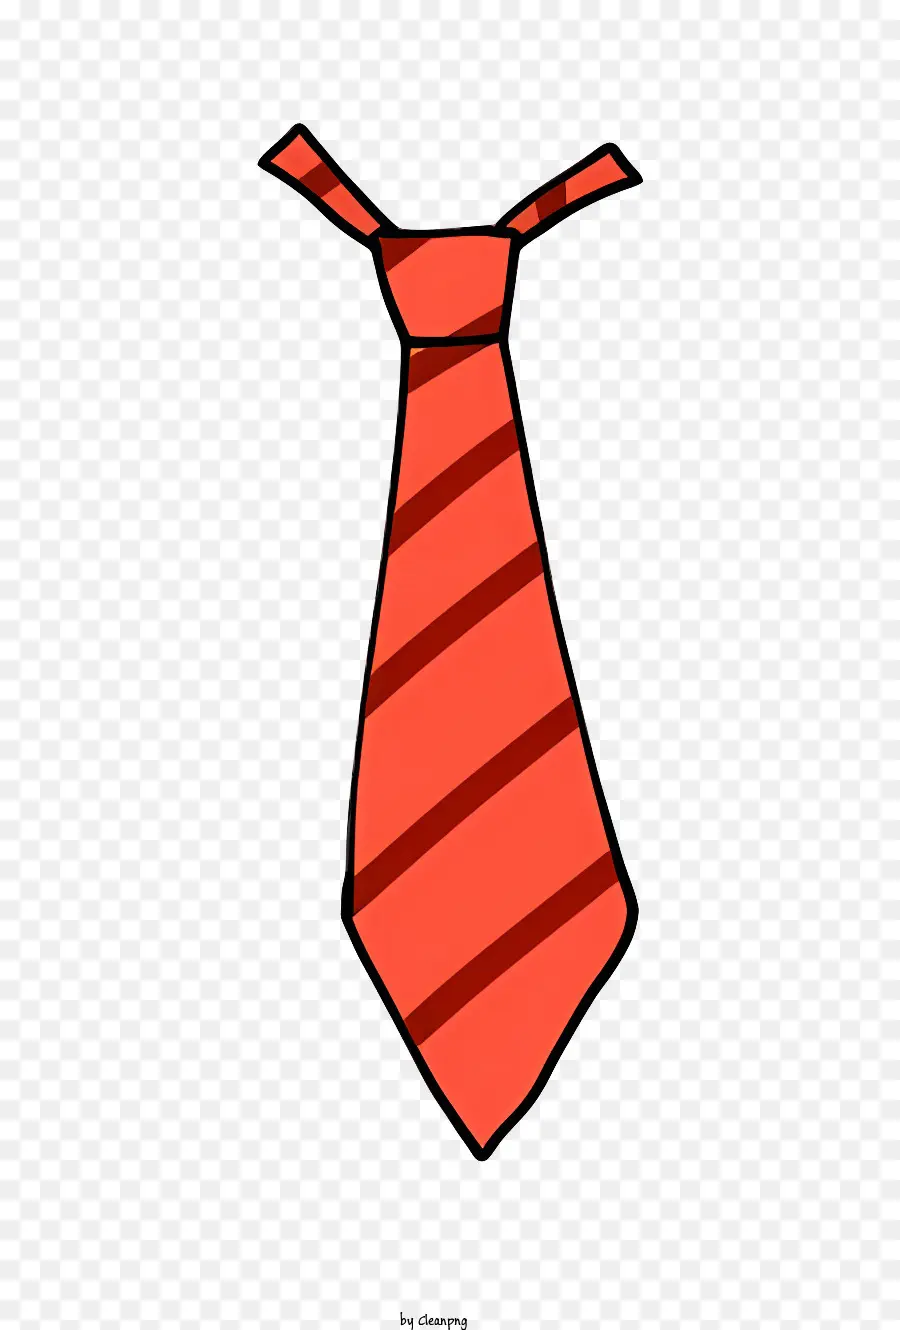 cravatta per cravatta per cravatta rossa icon con gancio di cravatta a strisce - Cravatta a strisce rossa appesa al gancio. 
Semplice